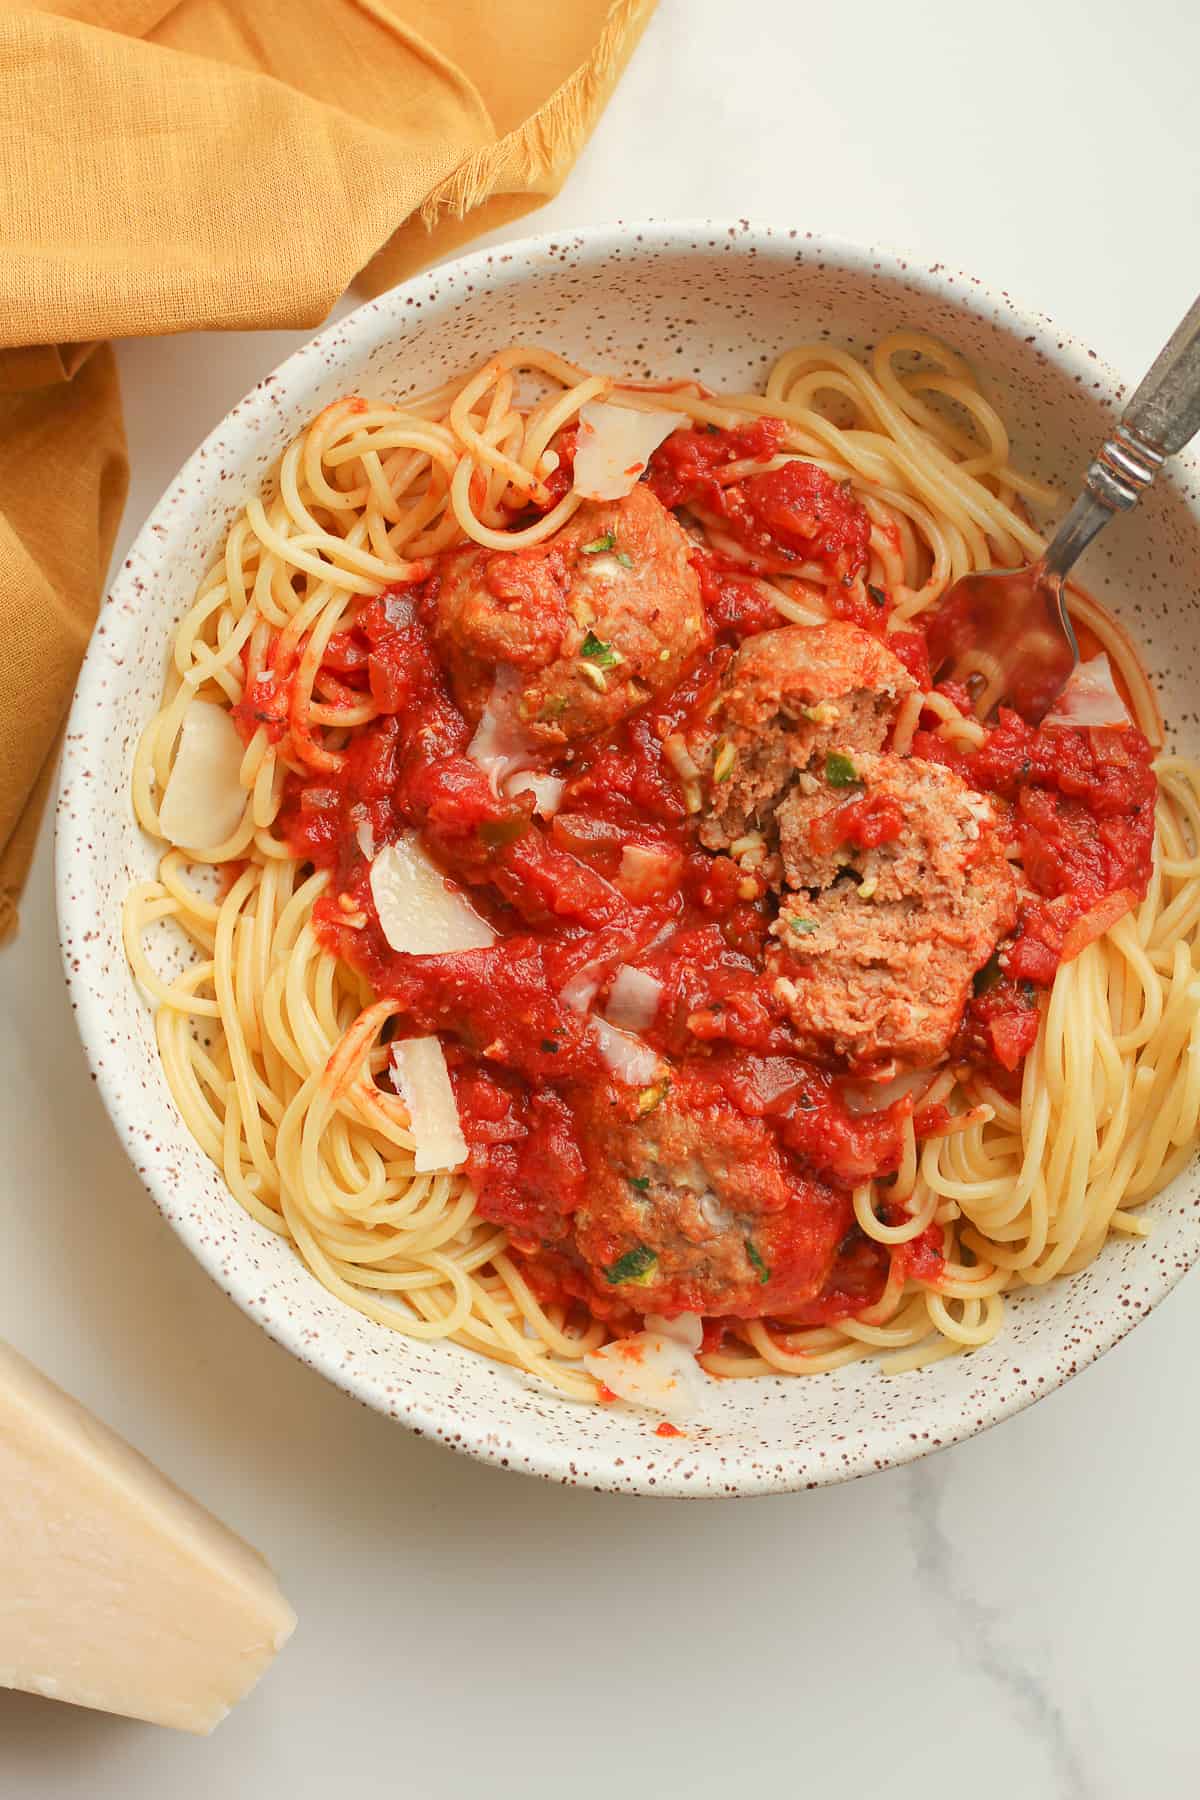 Spaghetti and turkey meatballs.